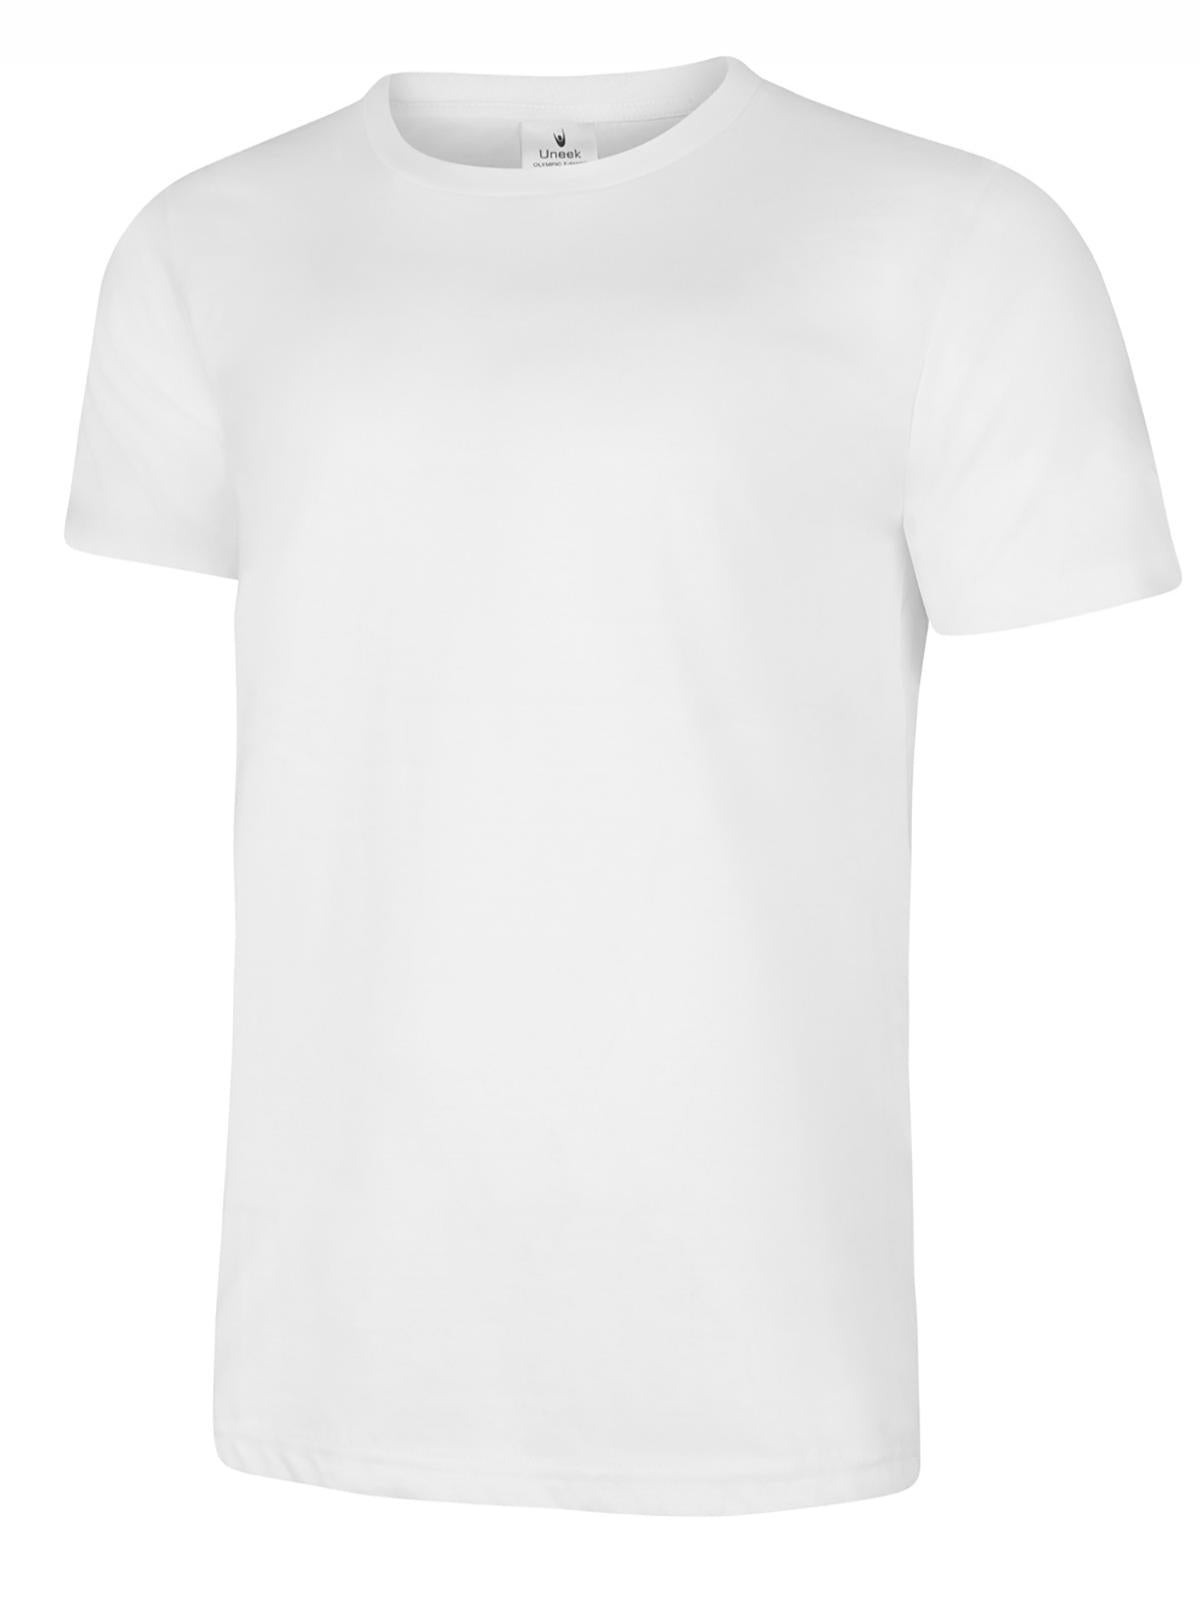 Uneek Olympic T-shirt UC320 - White